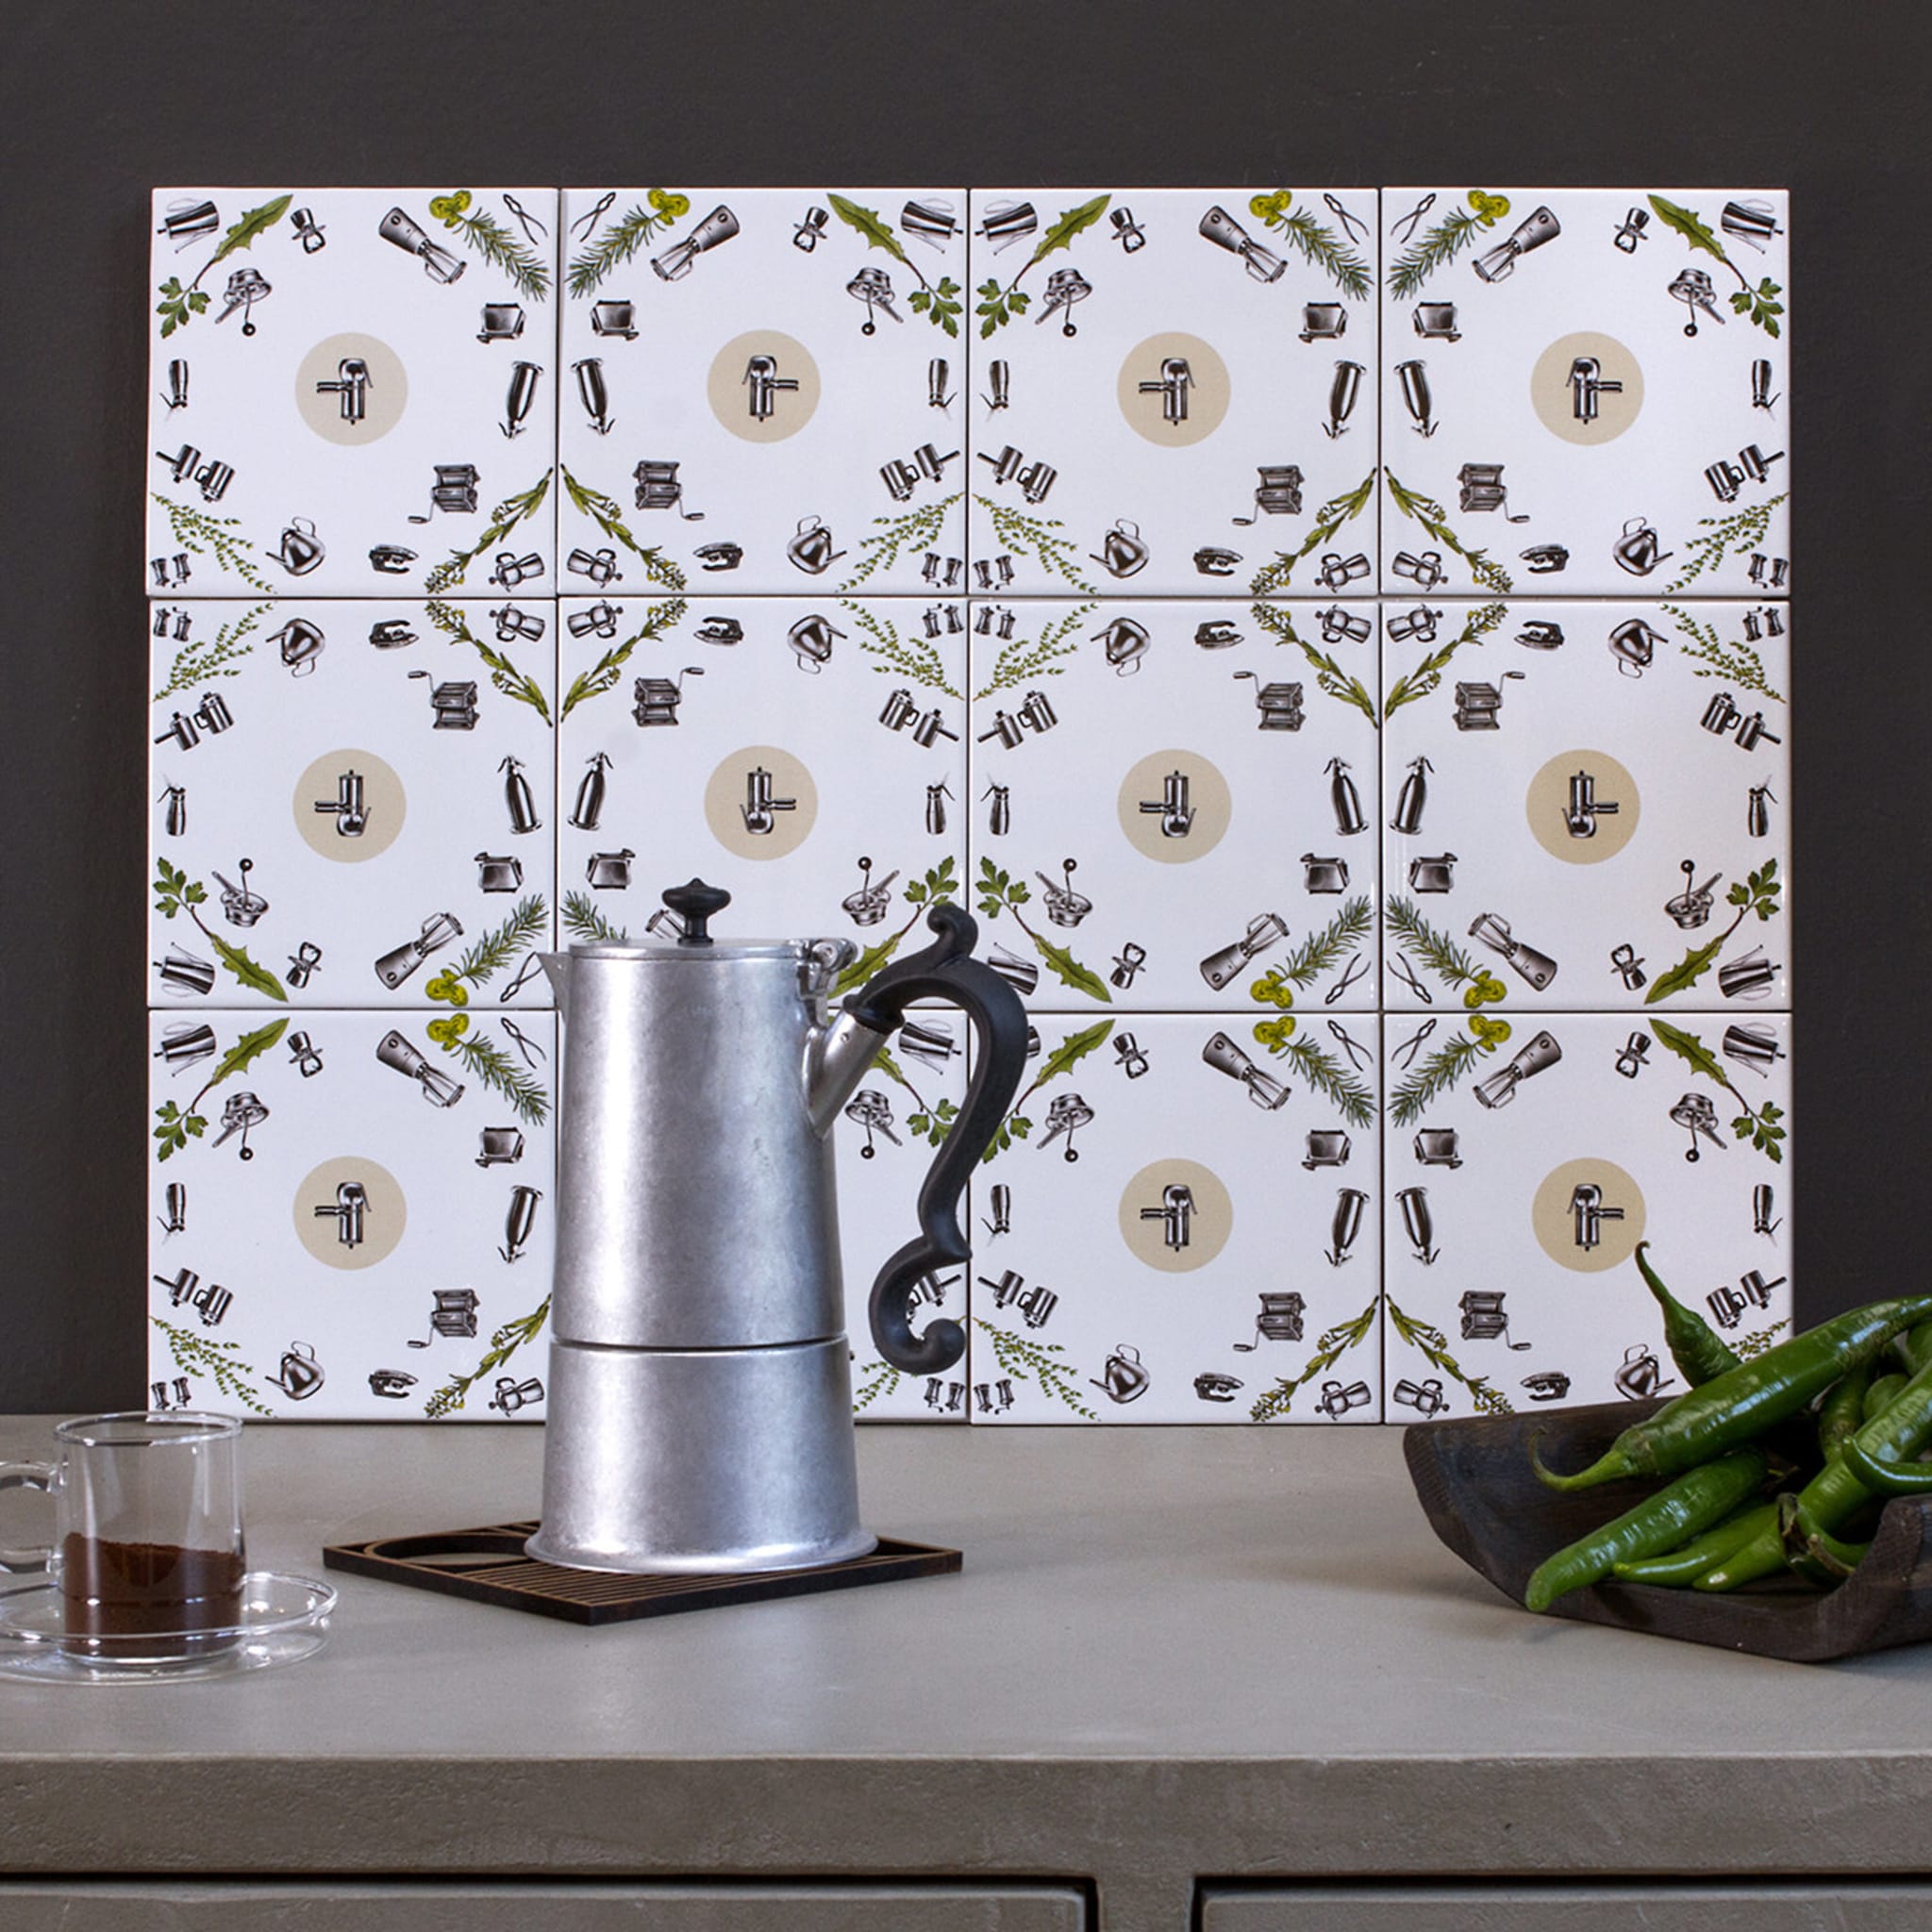 Set of 12 Cooker's Casalingo Green Wall Tiles  - Alternative view 1